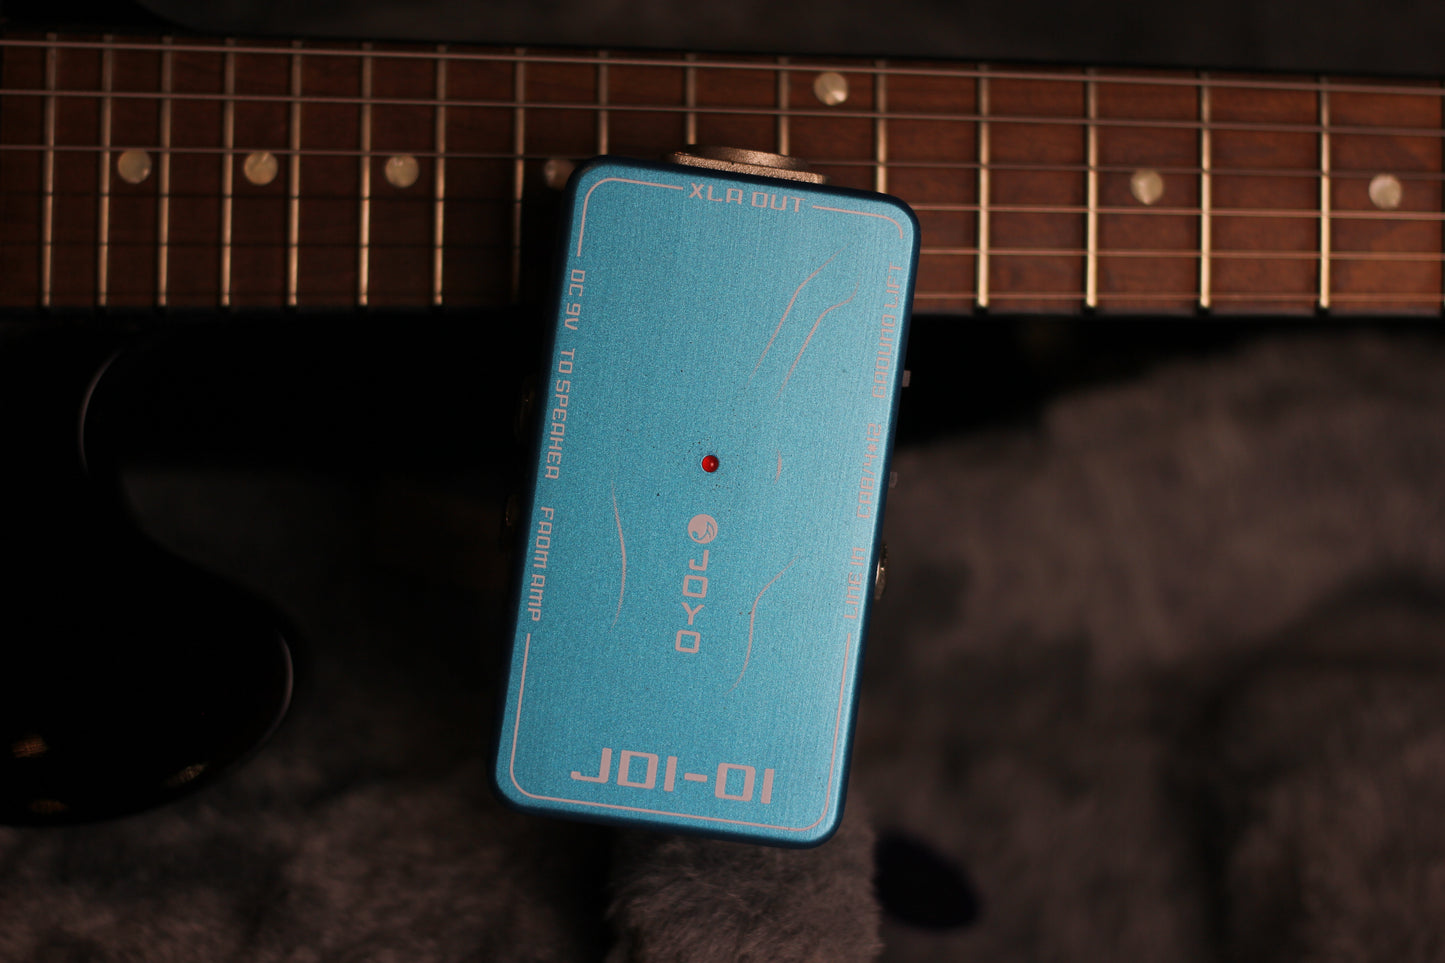 Joyo JDI-01 DI Box Guitar Pedal